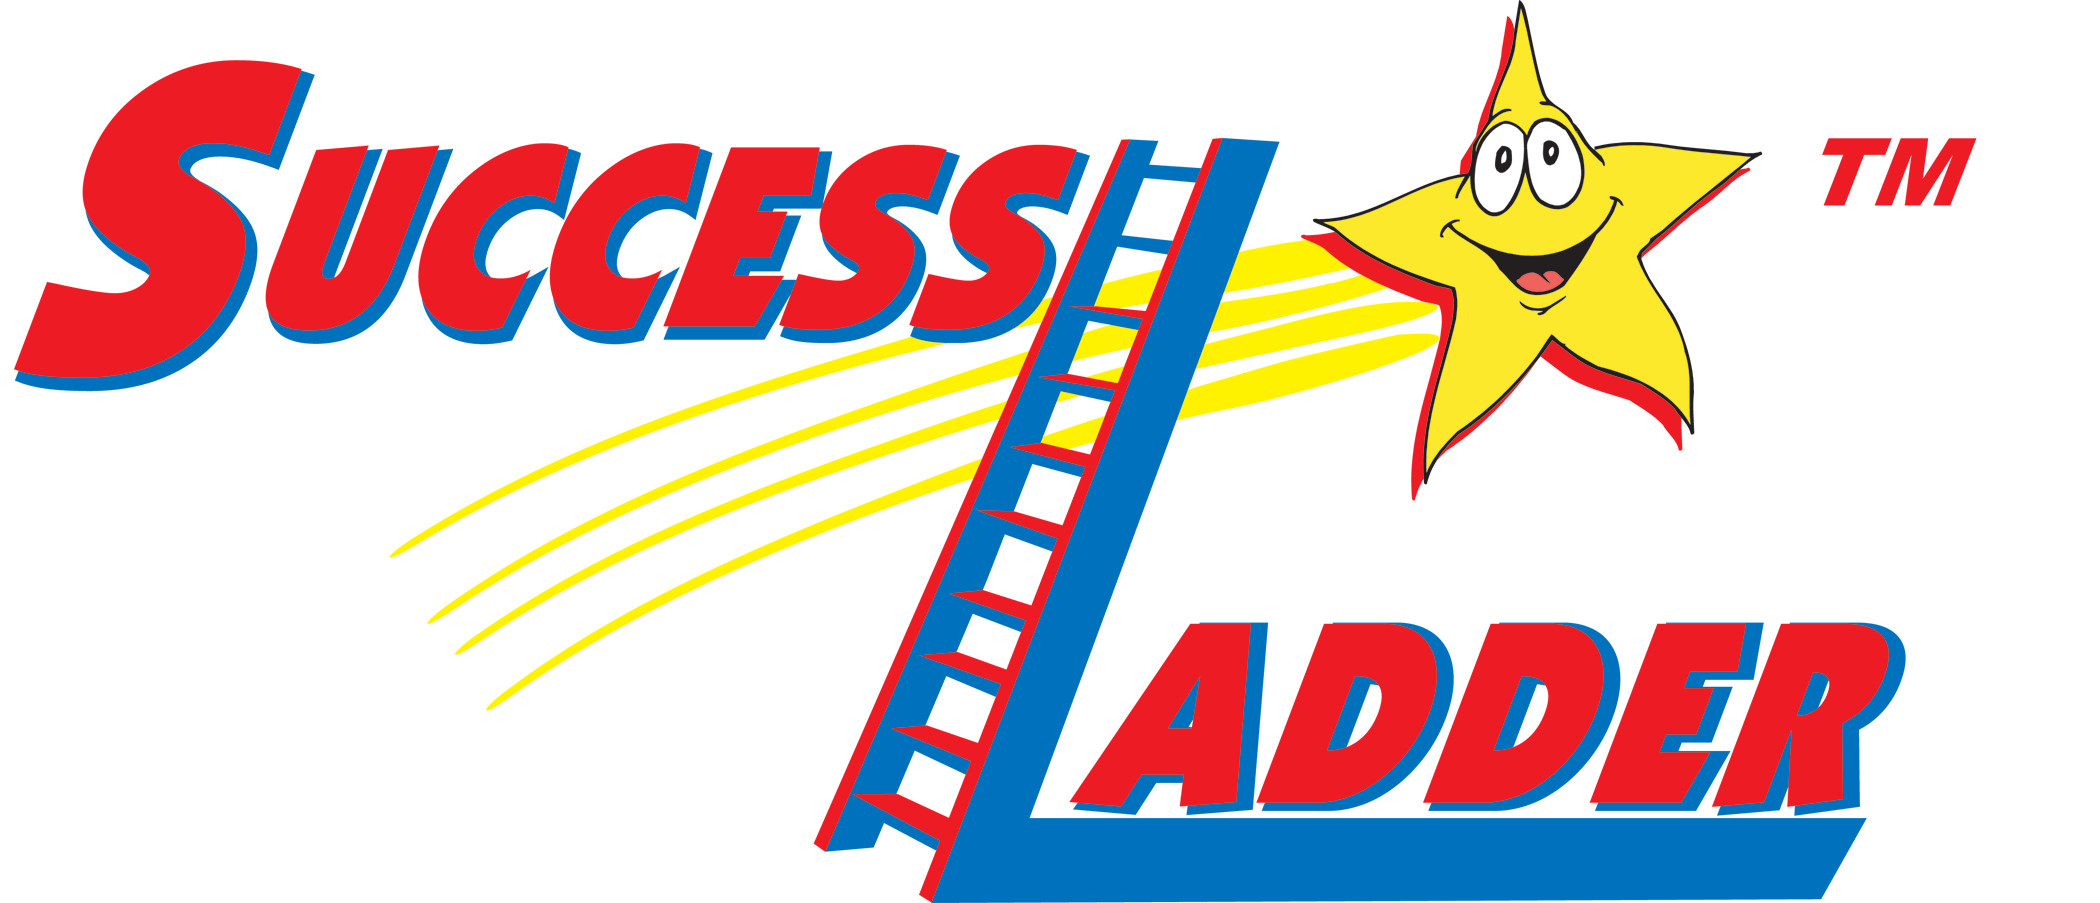 Ladder of Success PNG Background Image